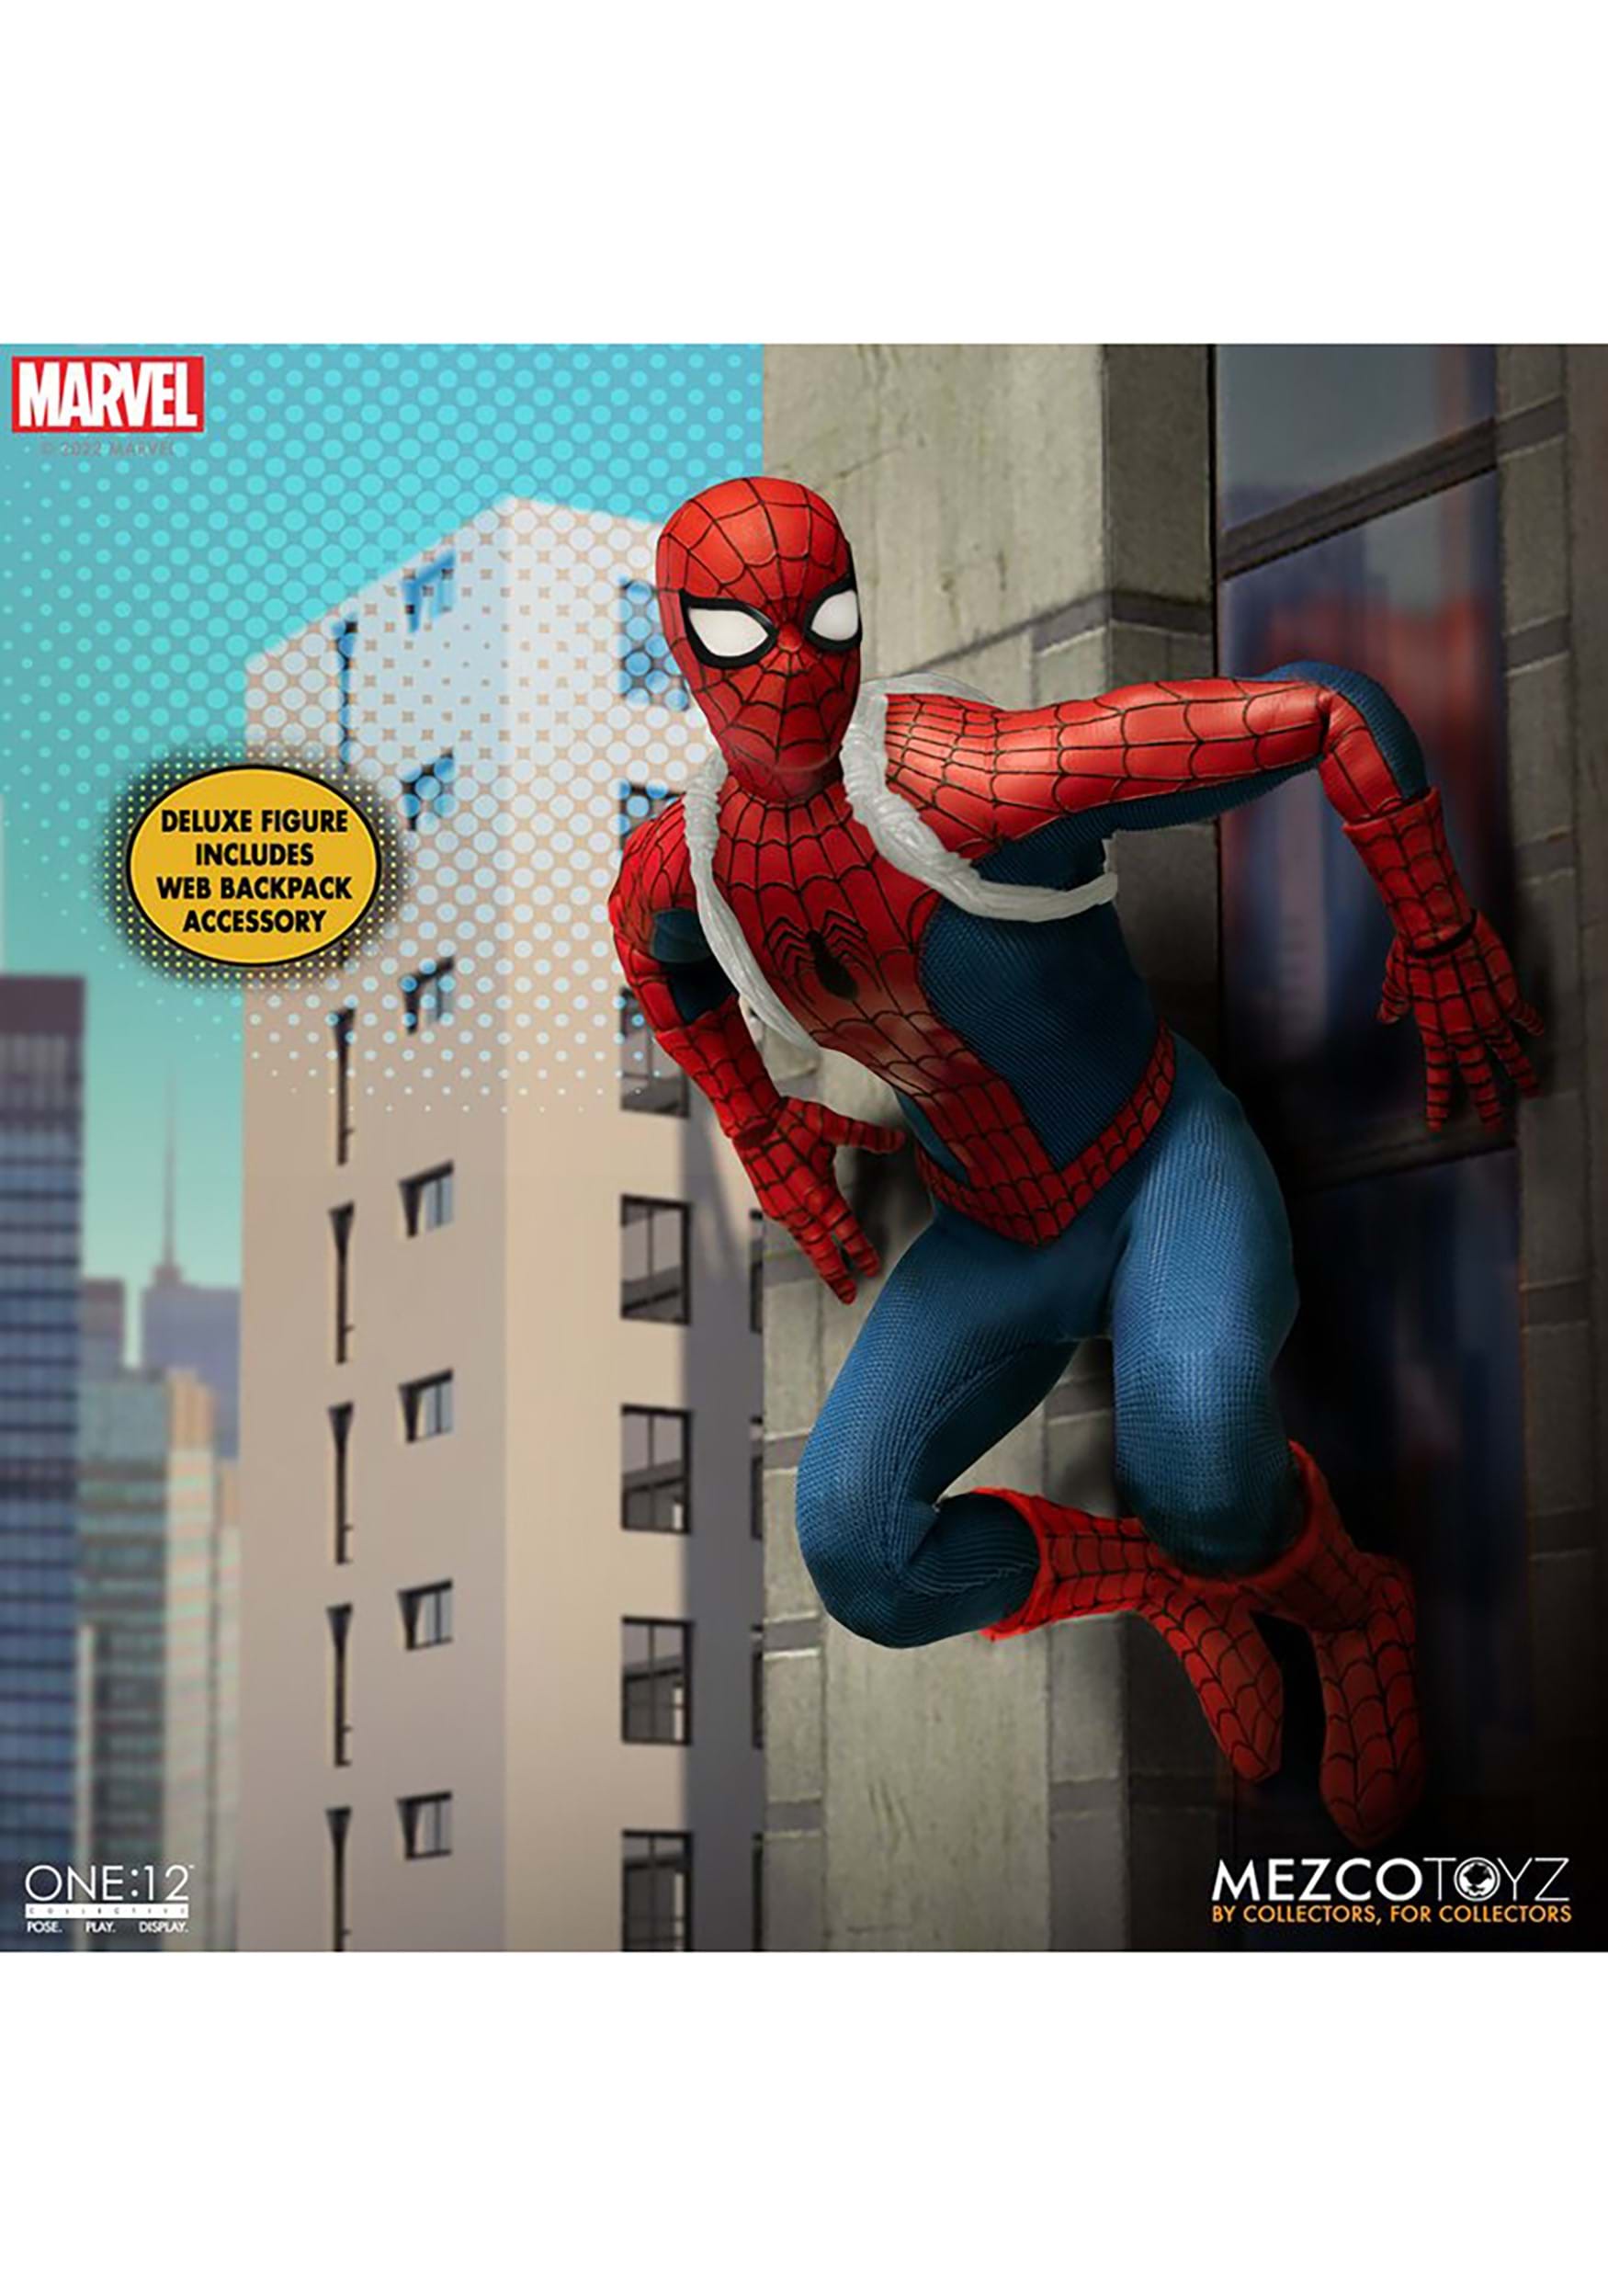 Spider-Man: No Way Home Marvel Legends Action Figure Friendly Neighborhood  Spider-Man 15 cm - Planet Fantasy